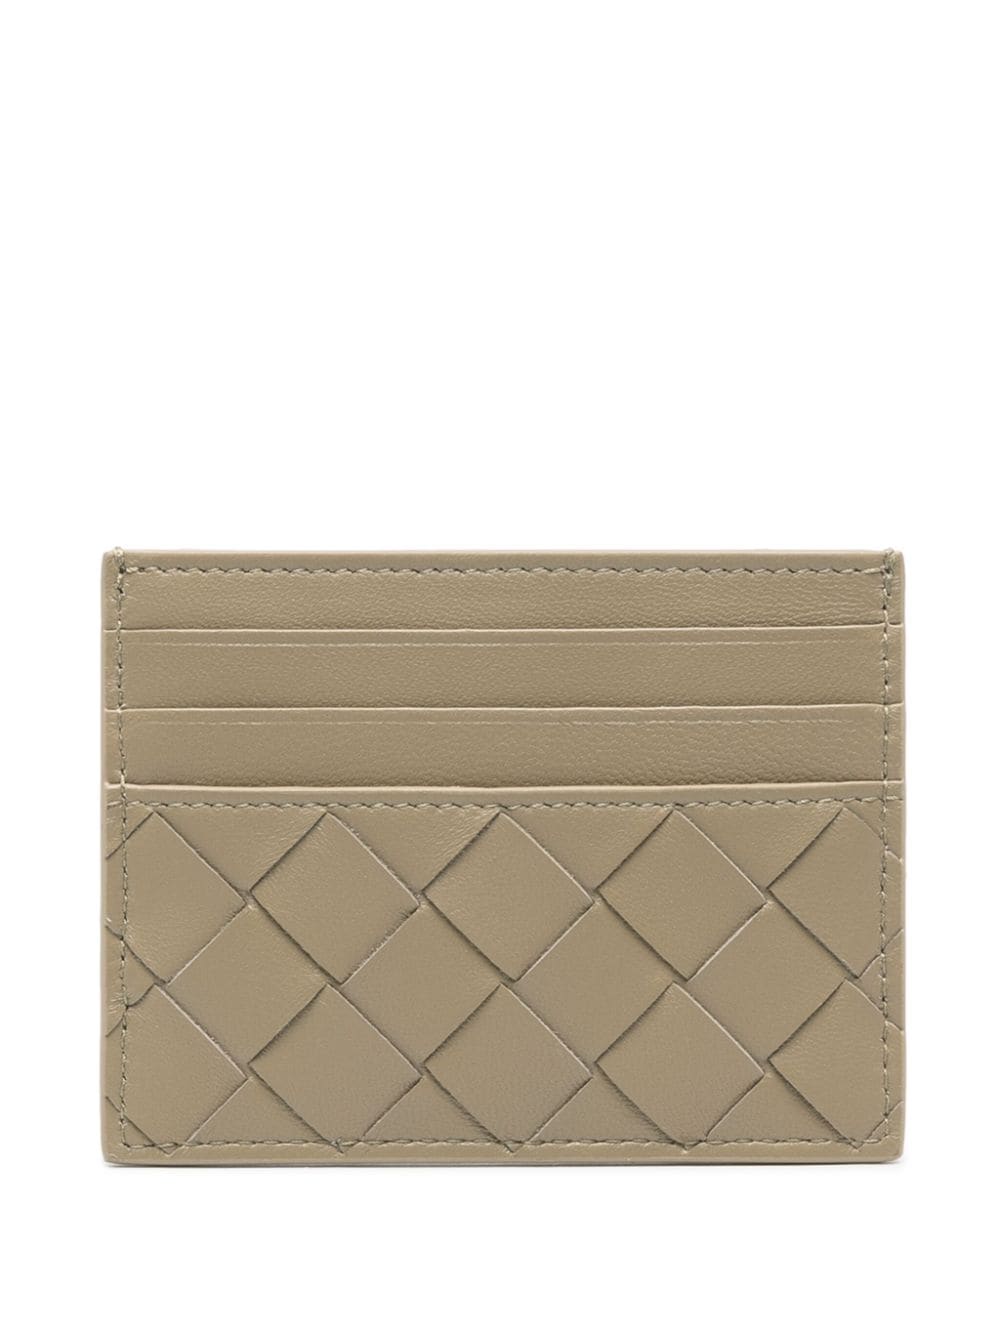 Bottega Veneta Intrecciato Leather Card Holder In Neutrals